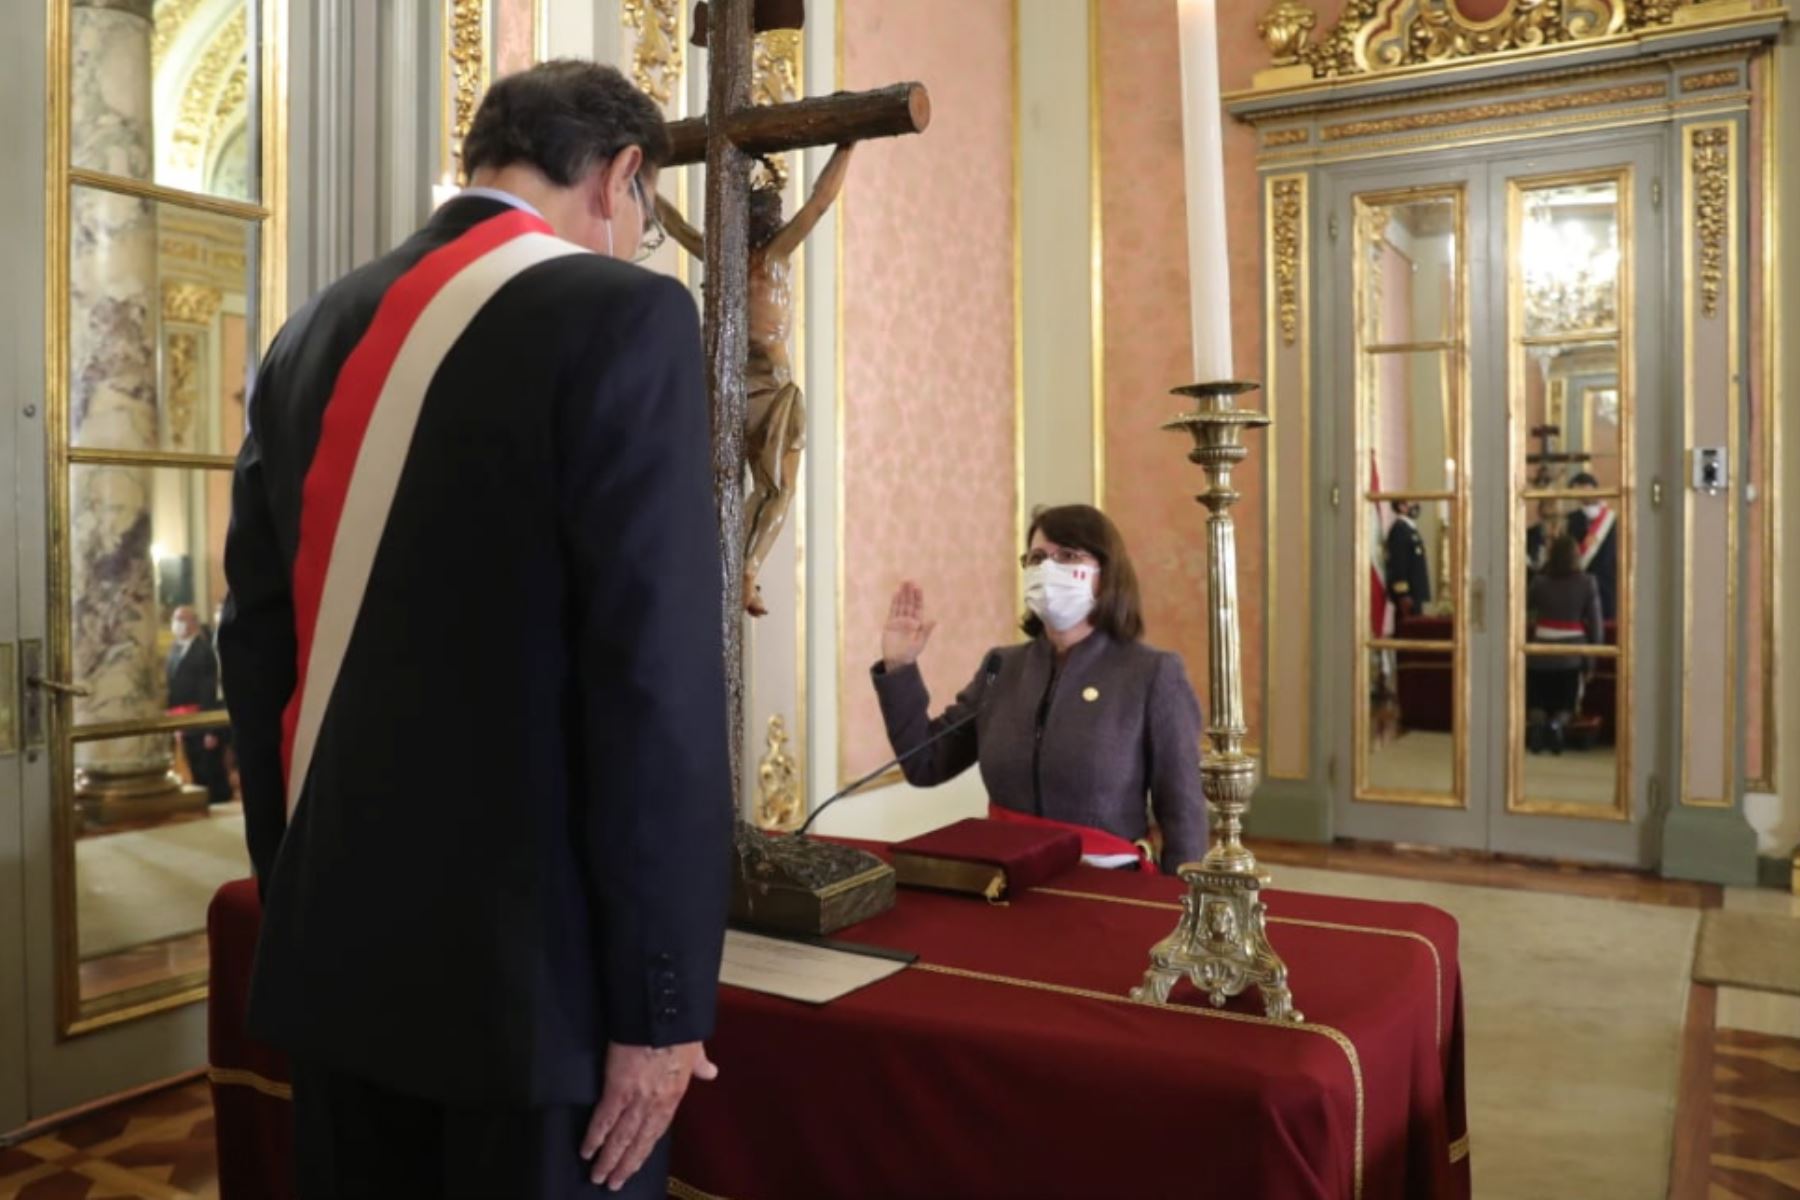 El presidente de la República, Martín Vizcarra, toma juramento a Pilar Mazzetti como ministra de Salud.

Foto: ANDINA/ Prensa Presidencia